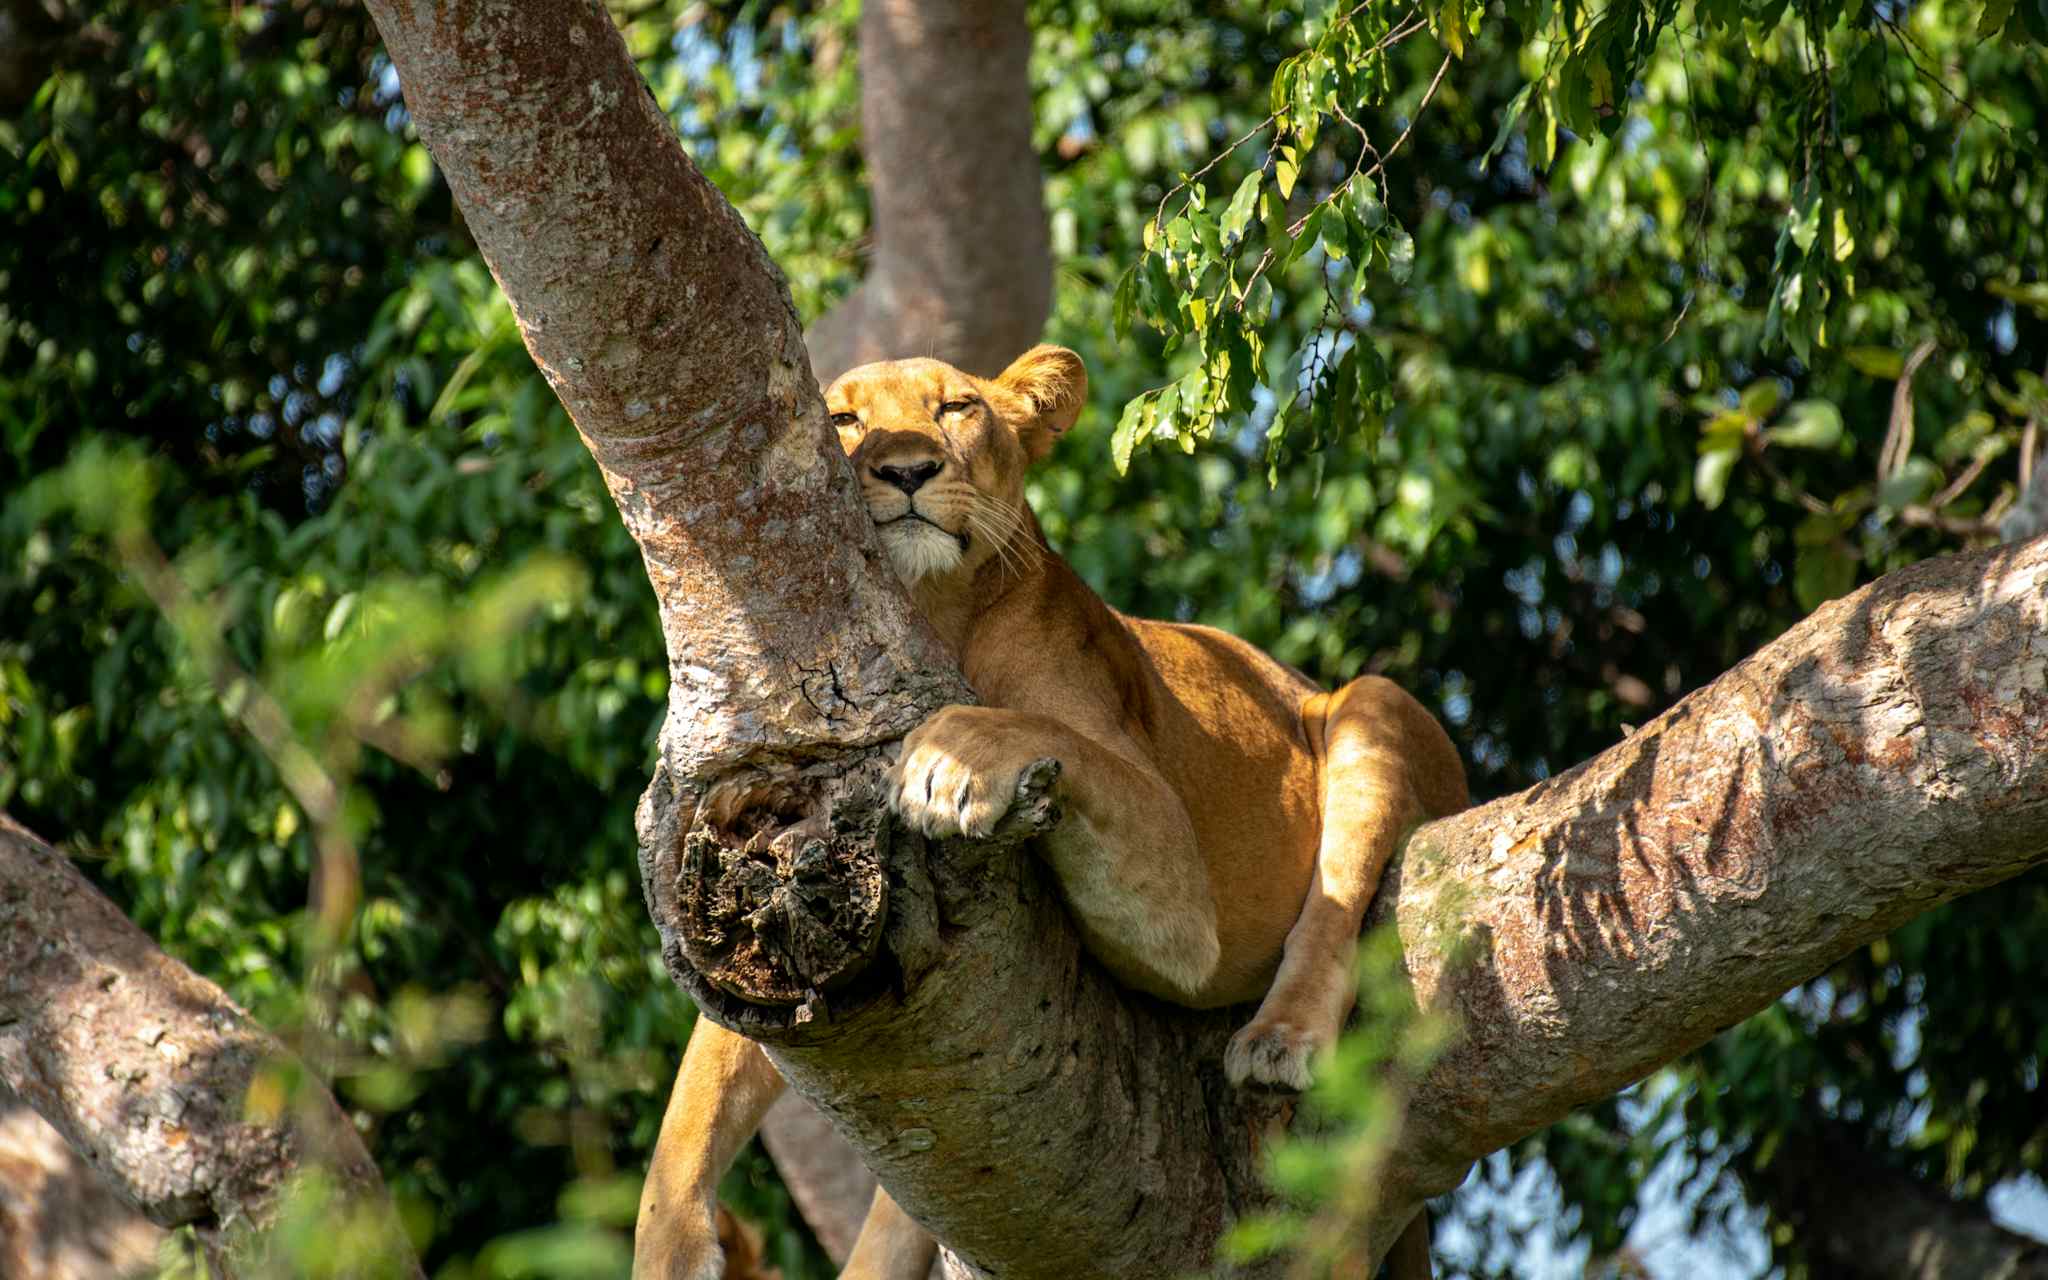 Queen Elizabeth National Park, Uganda
Host image - Mbogo African Safaris